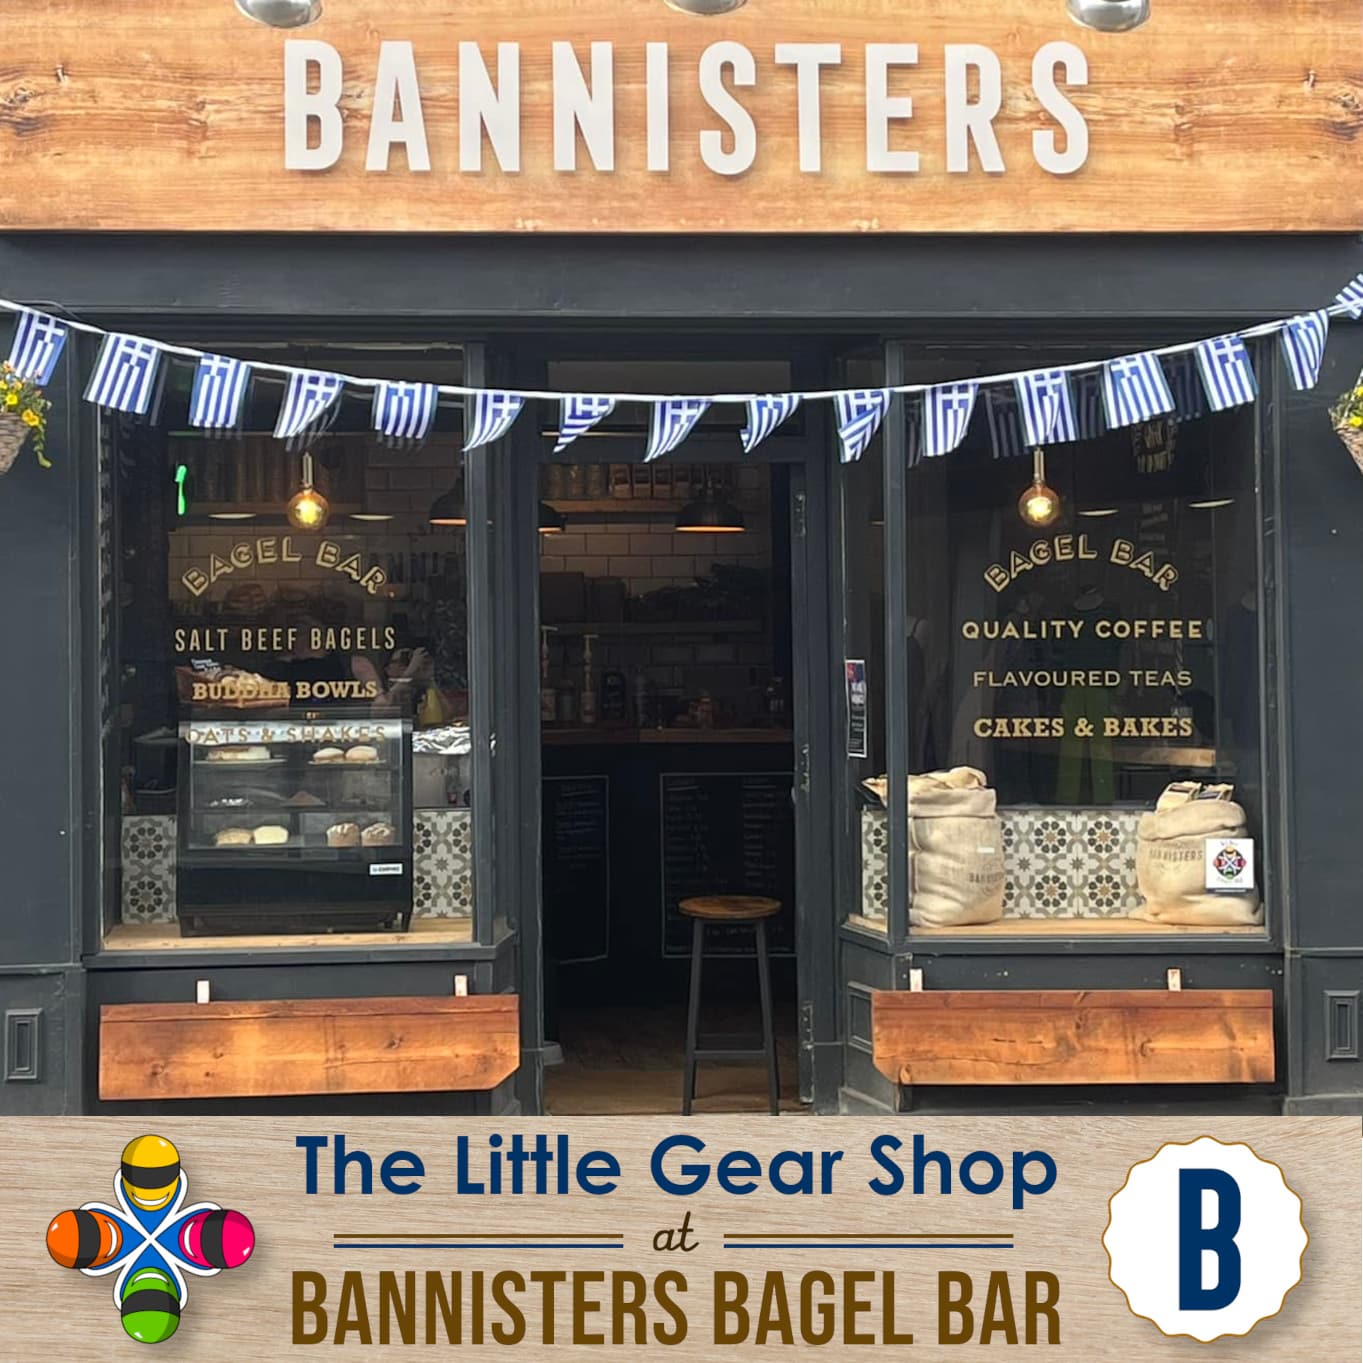 Crieff Cloverleaf Gear Shop at Bannisters Bagel Bar on Crieff High Street